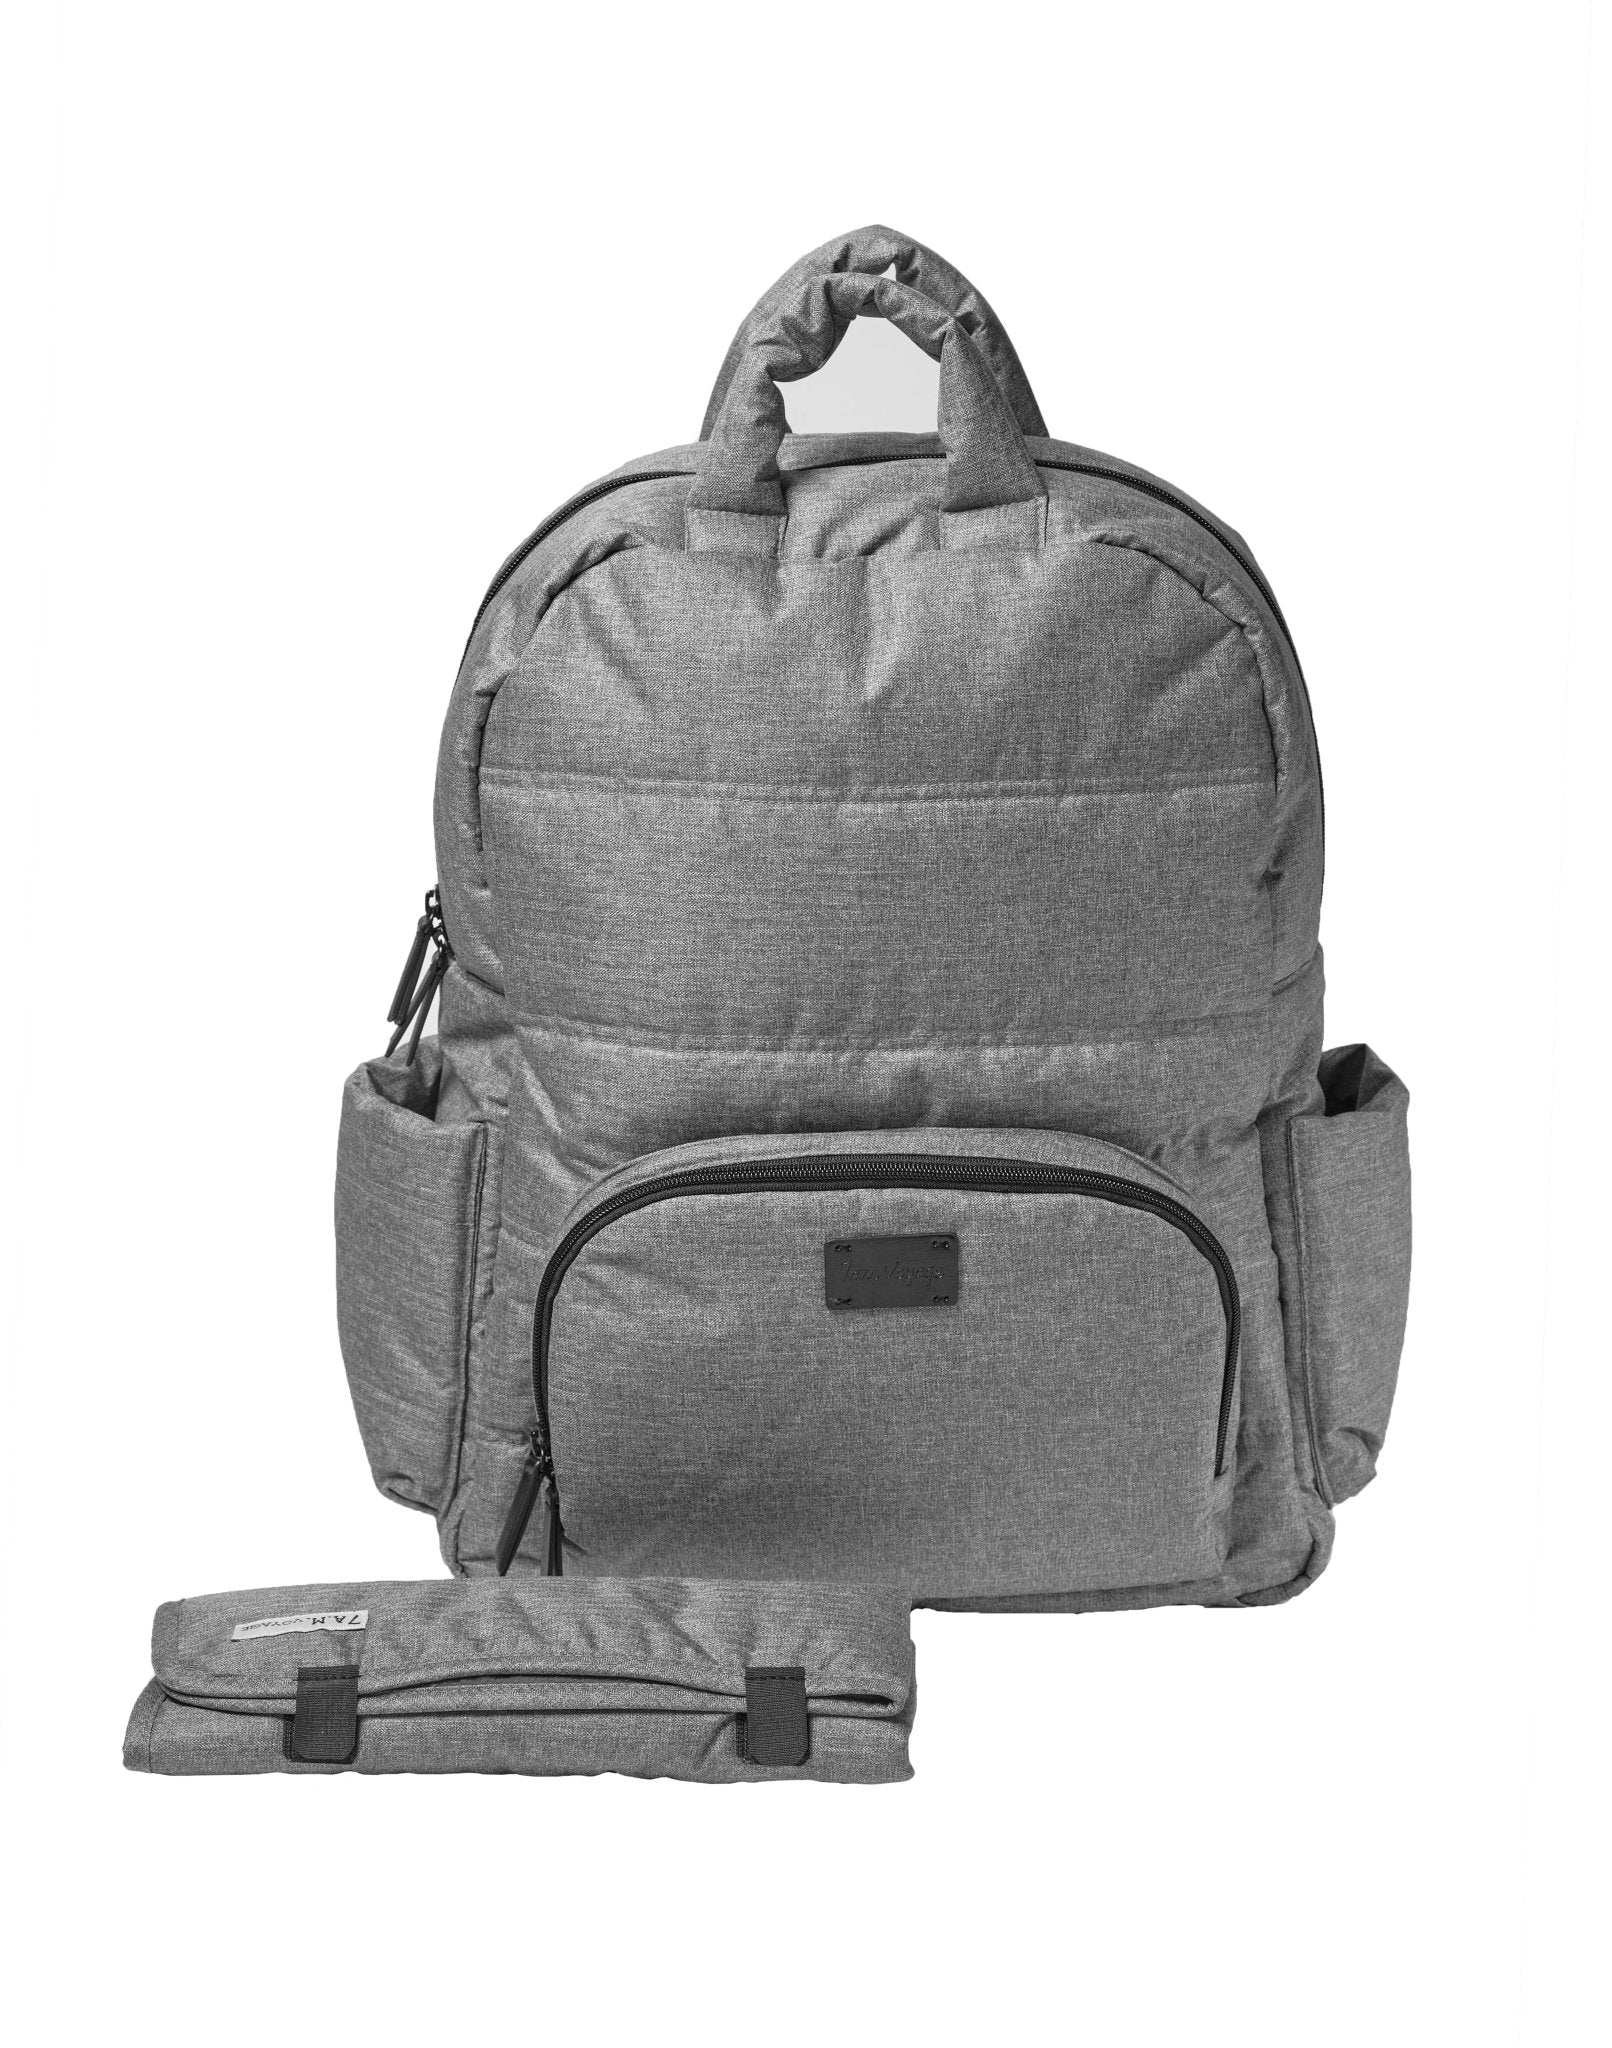 7 AM Voyage Diaper Bag Backpack - ANB Baby -$75 - $80